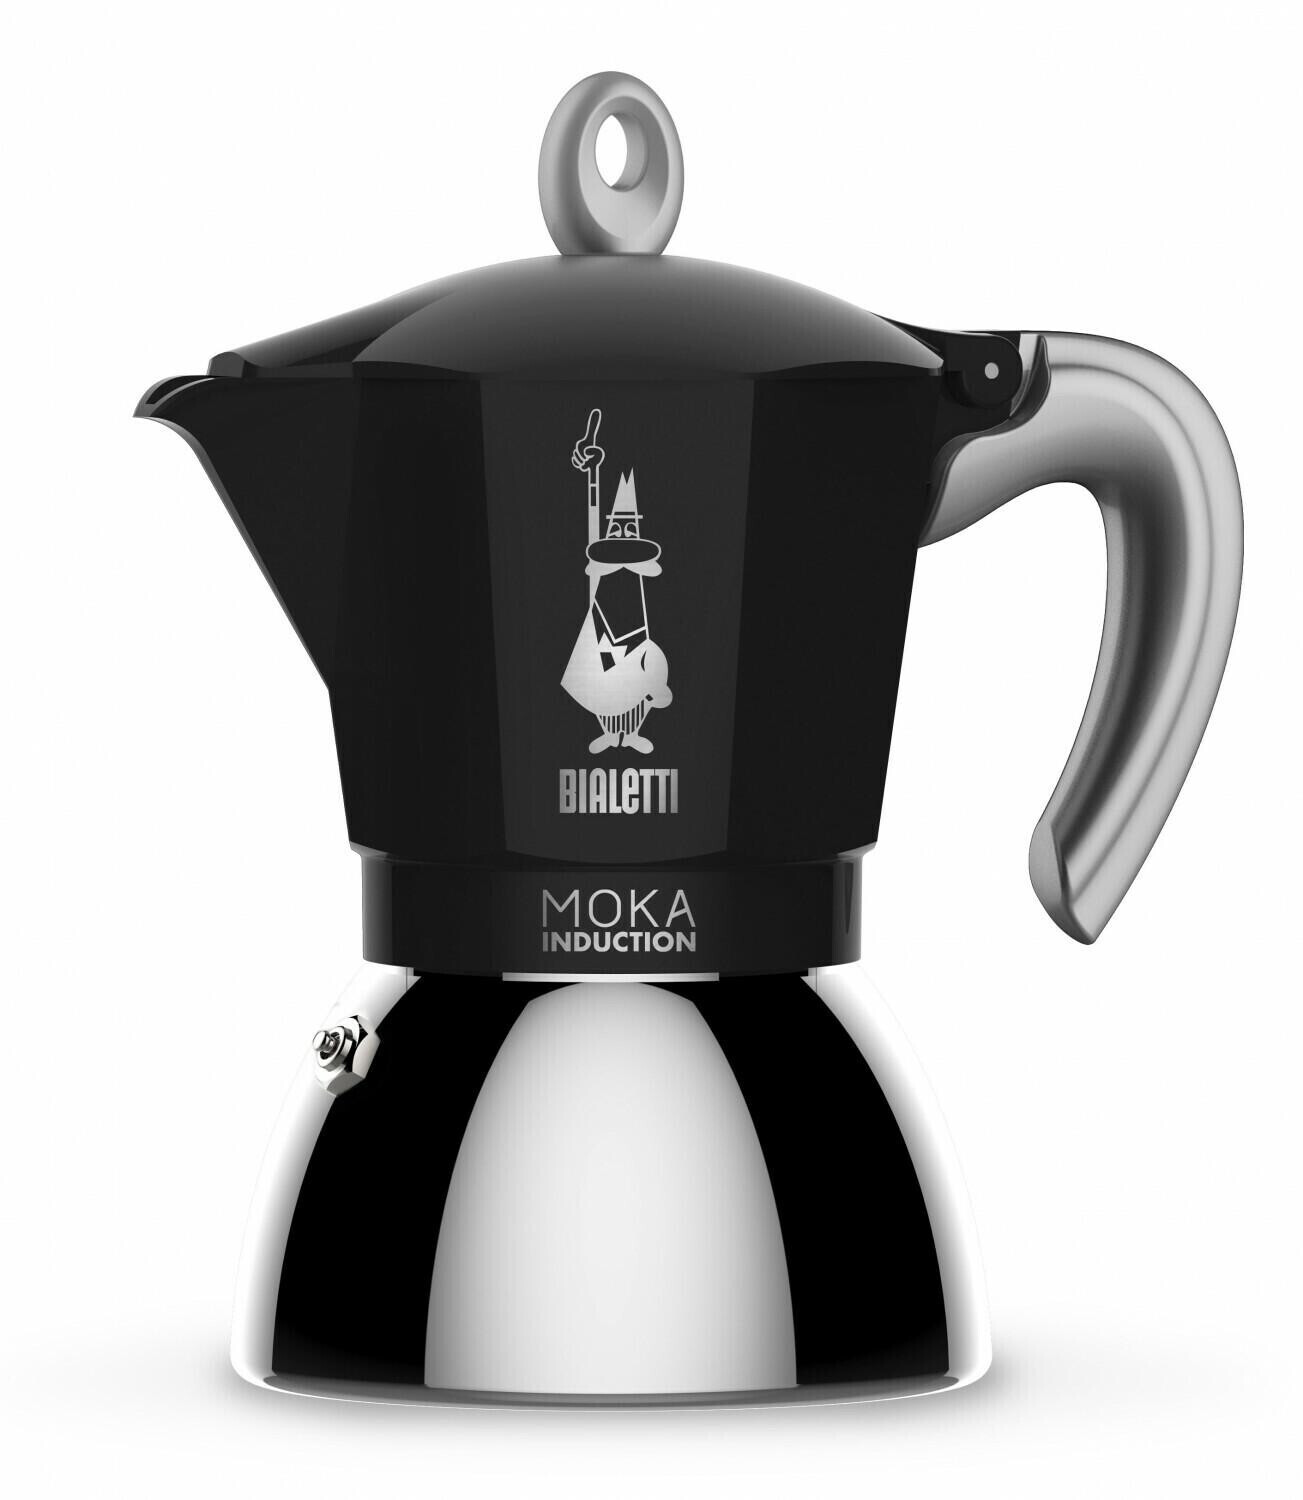 Soldes Bialetti Espresso maker Moka Induction Black (capacity: 6